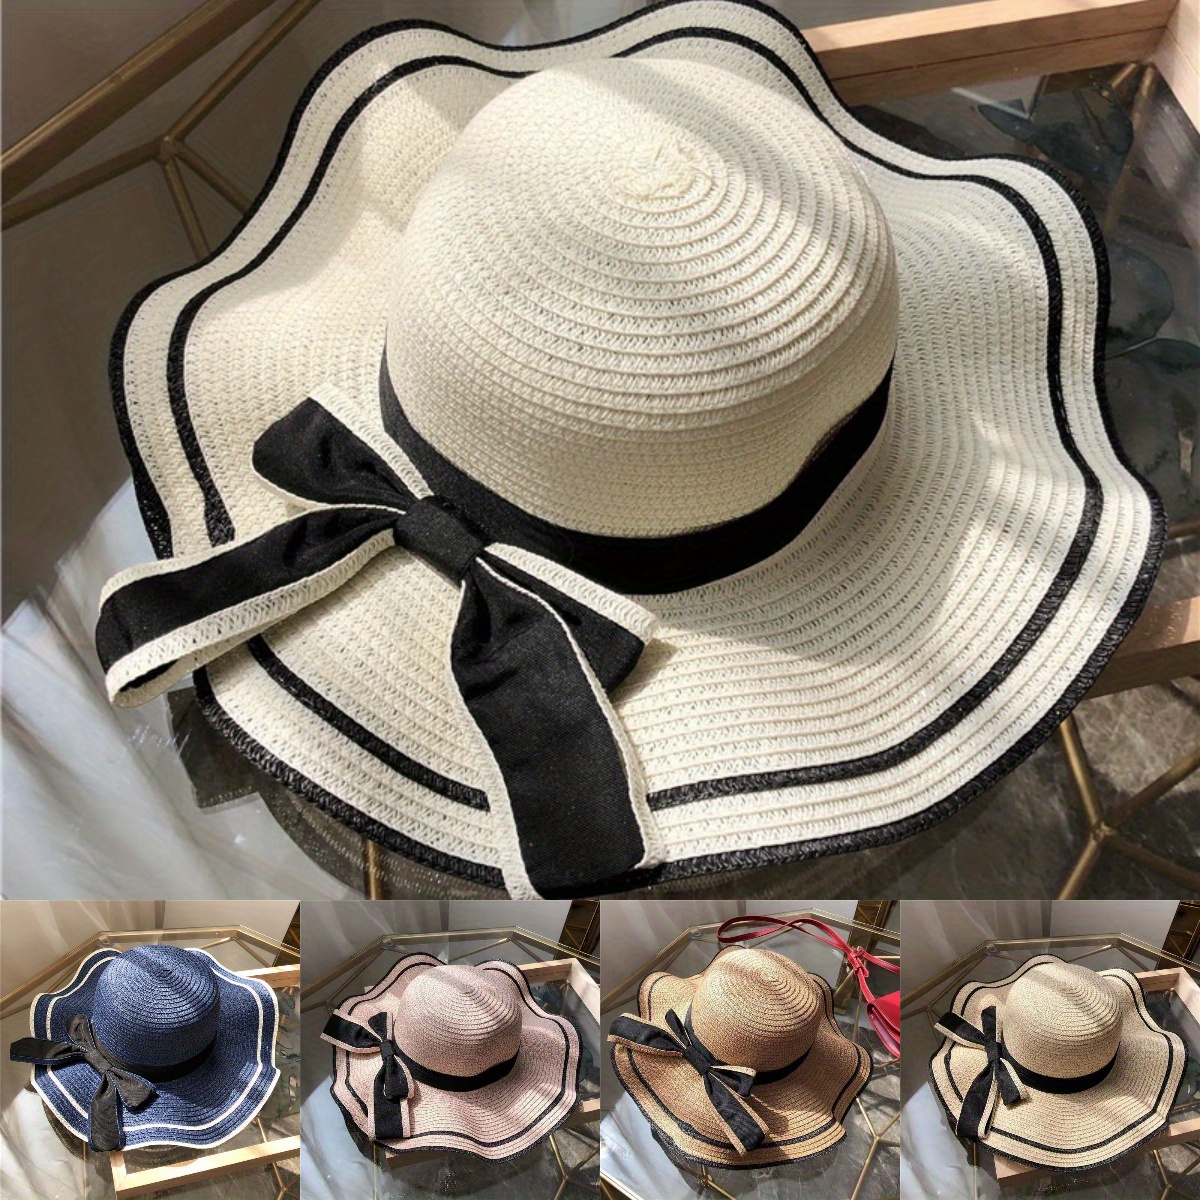 

Women's Summer Wide Brim Straw Sun Hat With Elegant Black Bow, Beach Bucket Hat, Seaside Sun Protection, Travel Holiday Accessory